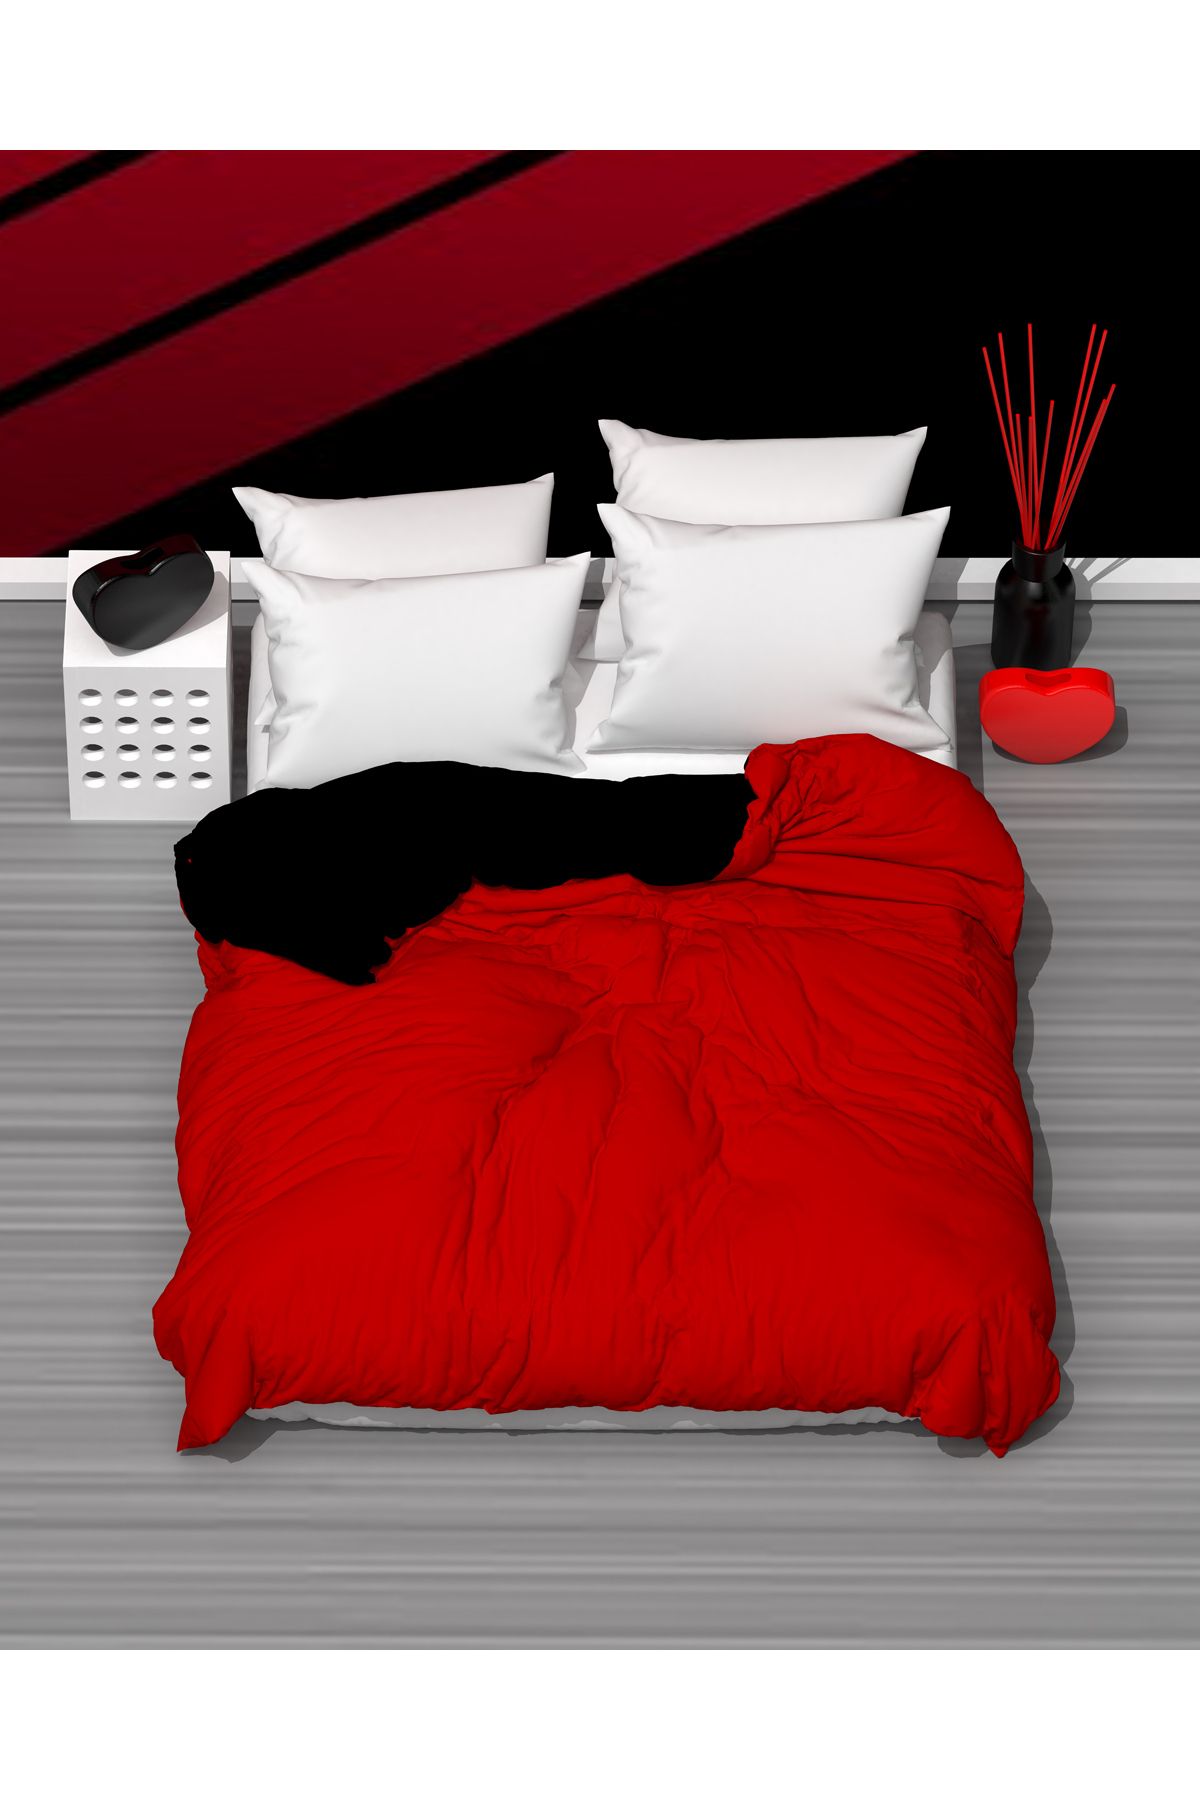 MODELHOME Çift Kişilik İki Renkli (Kırmızı-Siyah) Pamuklu Ranforce Kumaş Nevresim,Yorgan Kılıfı (200 x 230 cm)